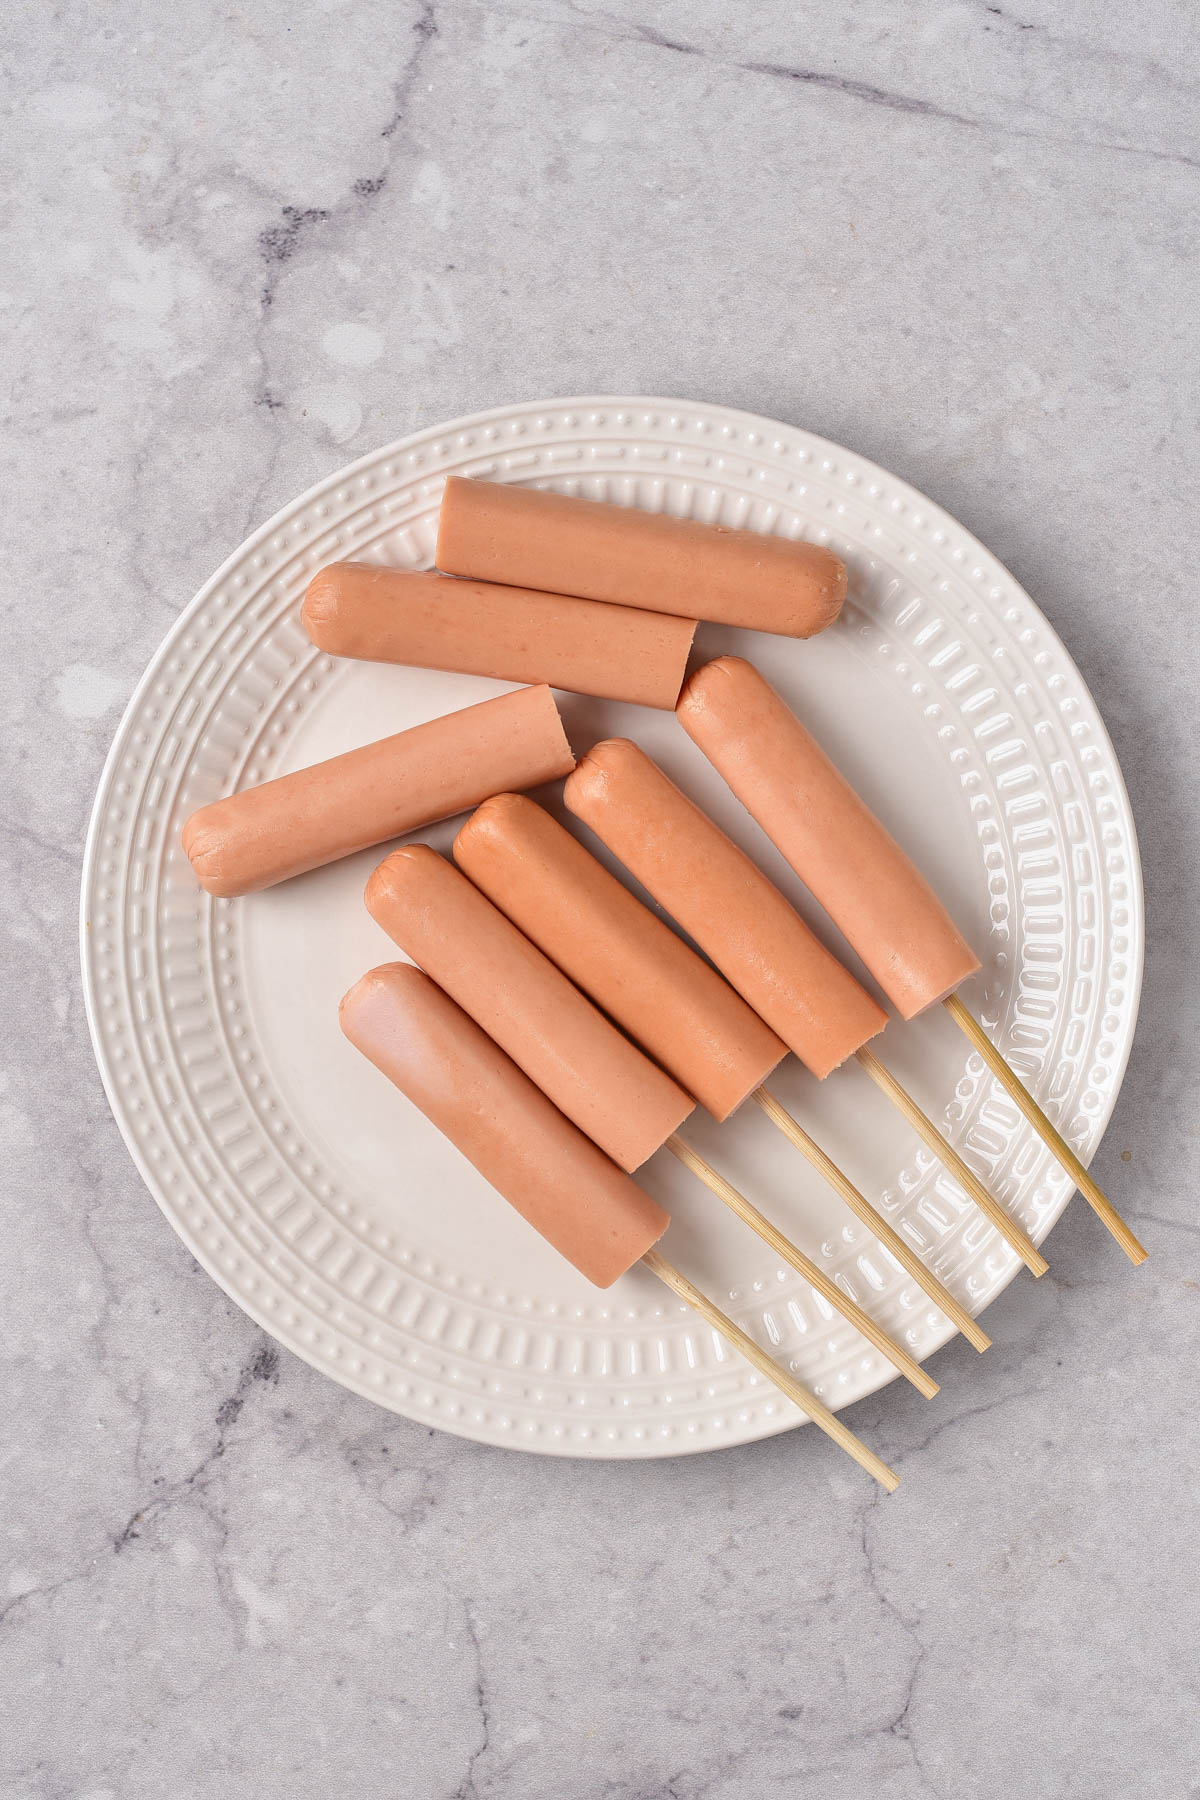 Hot dogs on sticks on plate